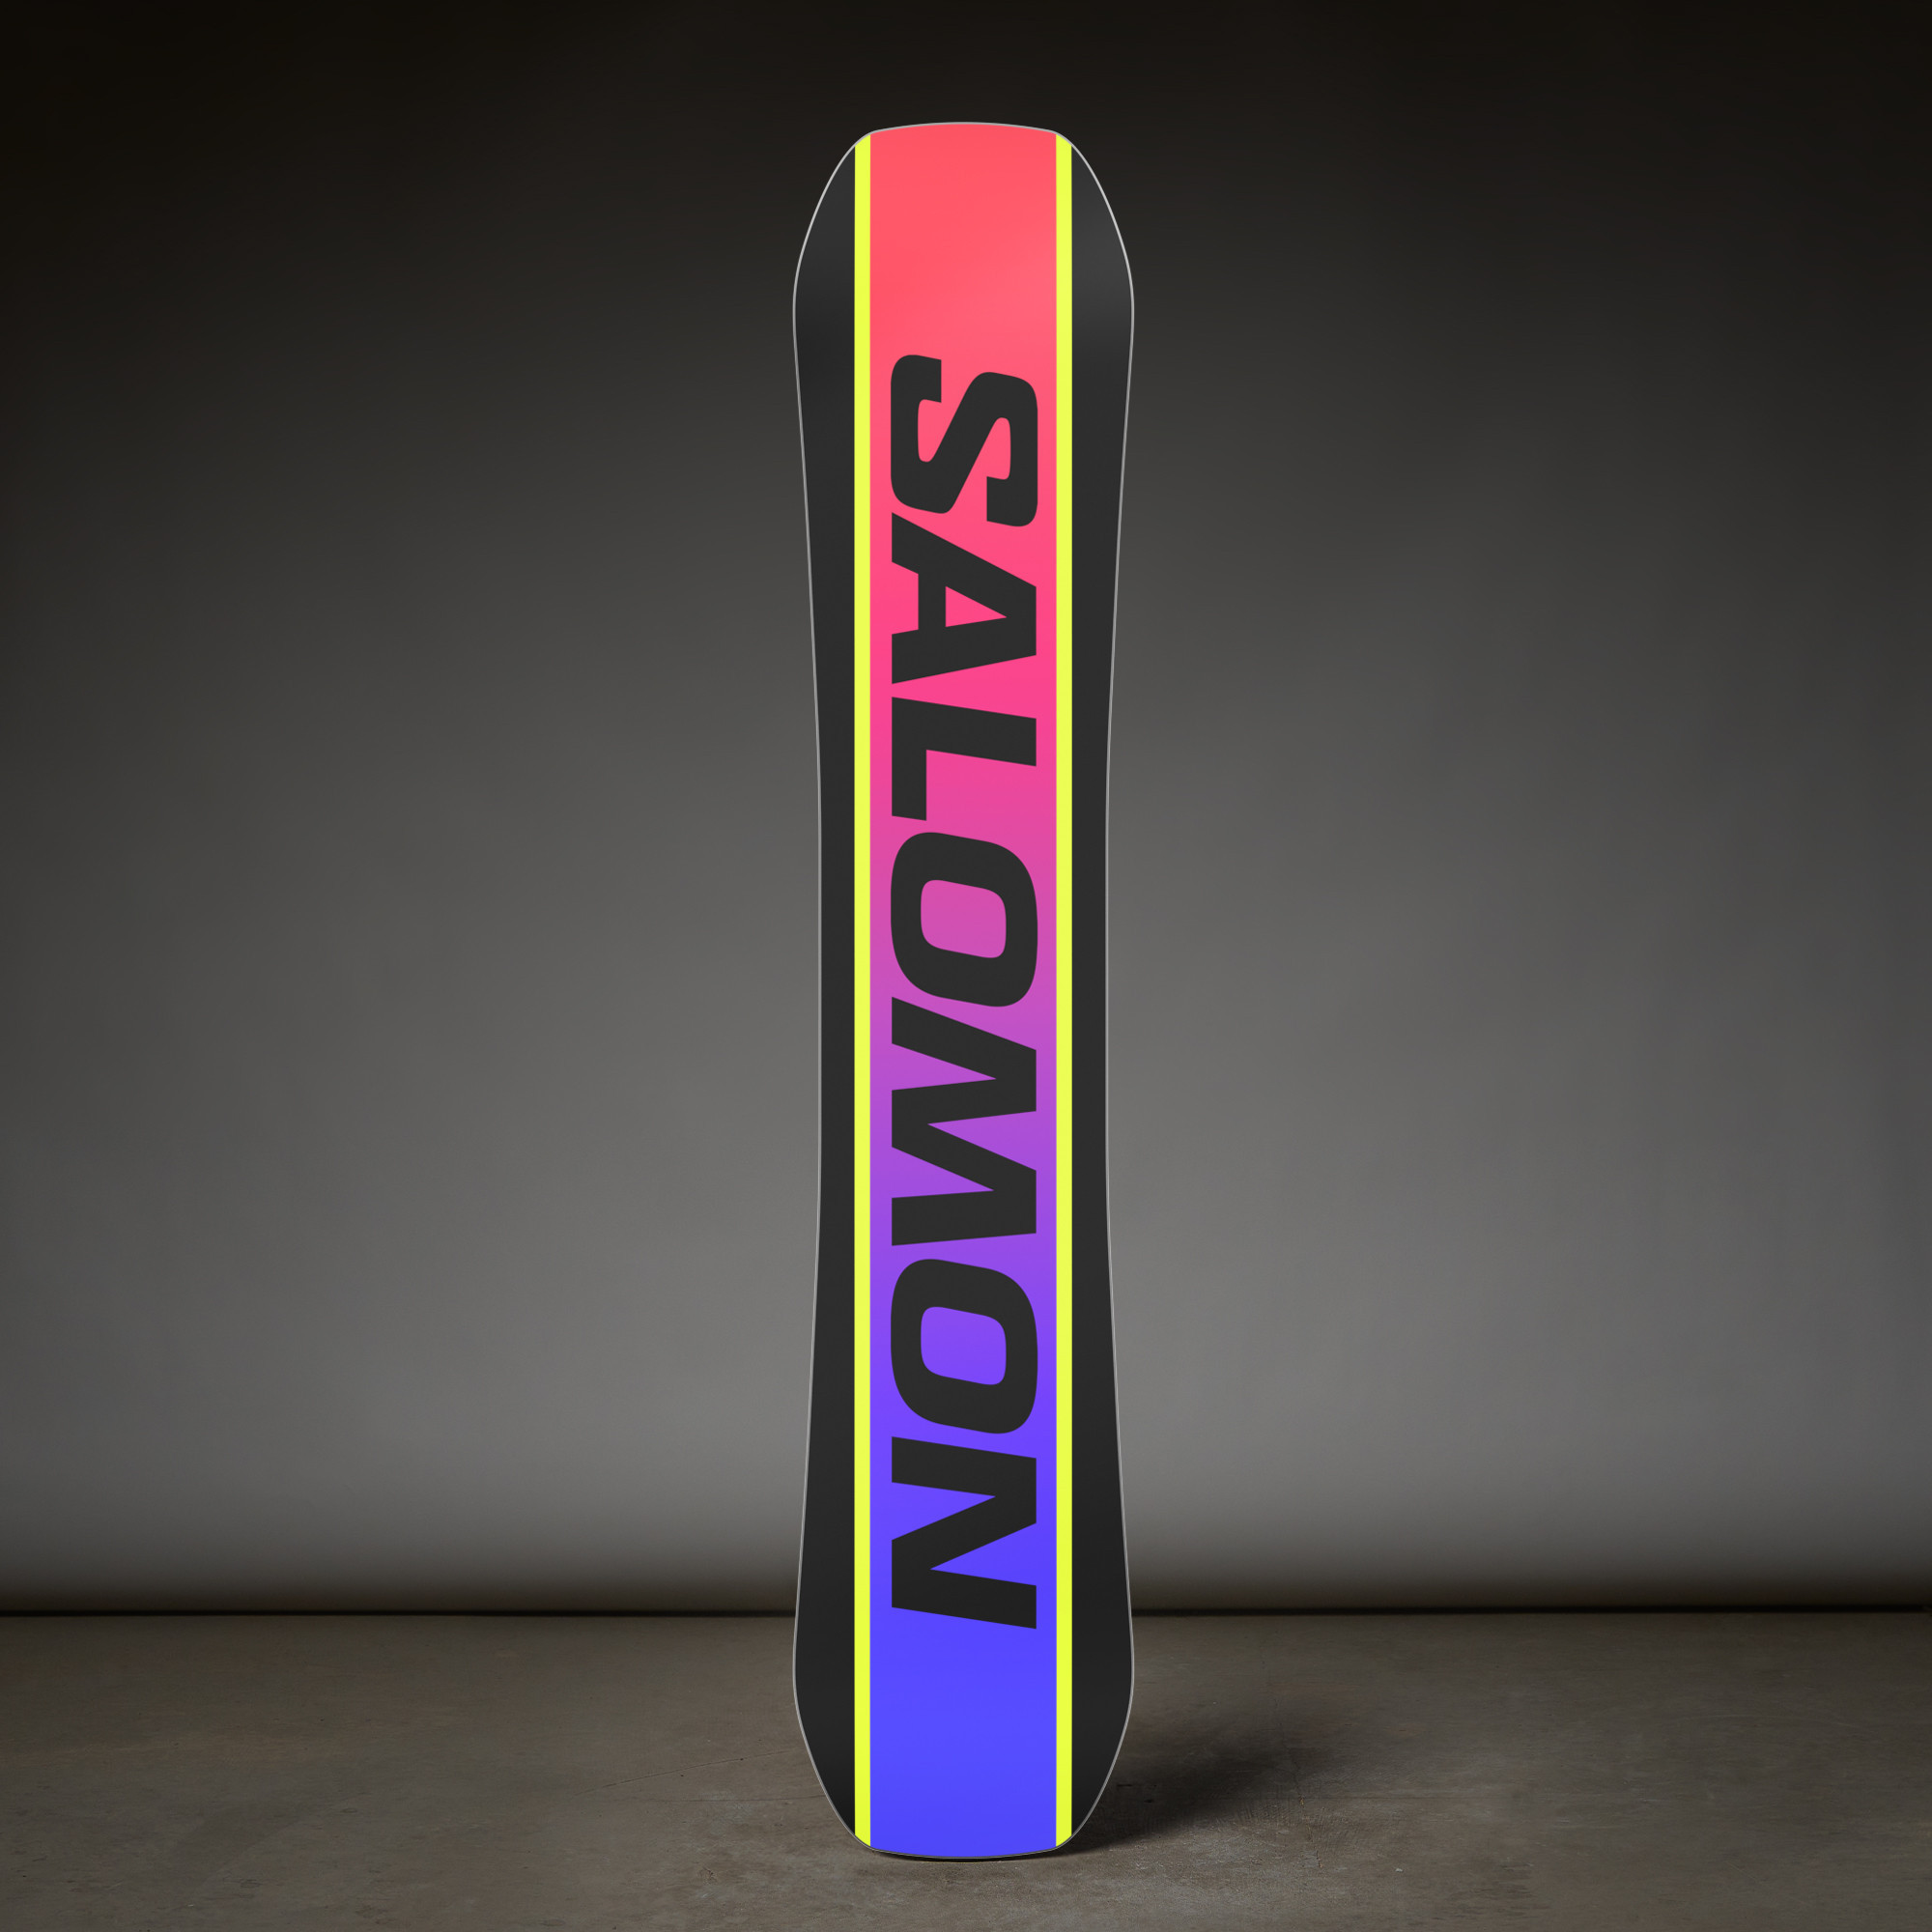 Salomon Huck Knife Snowboard 2025